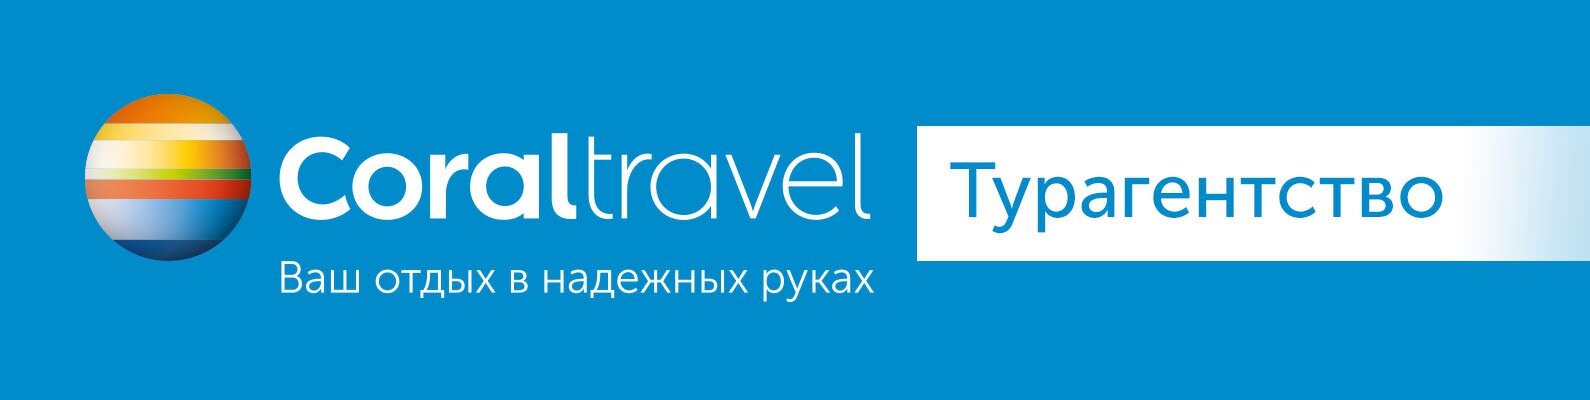 Https coral ru. Coral Travel логотип. Coral Travel турагентство. Coral Travel без фона. Coral Travel турагентство логотип.